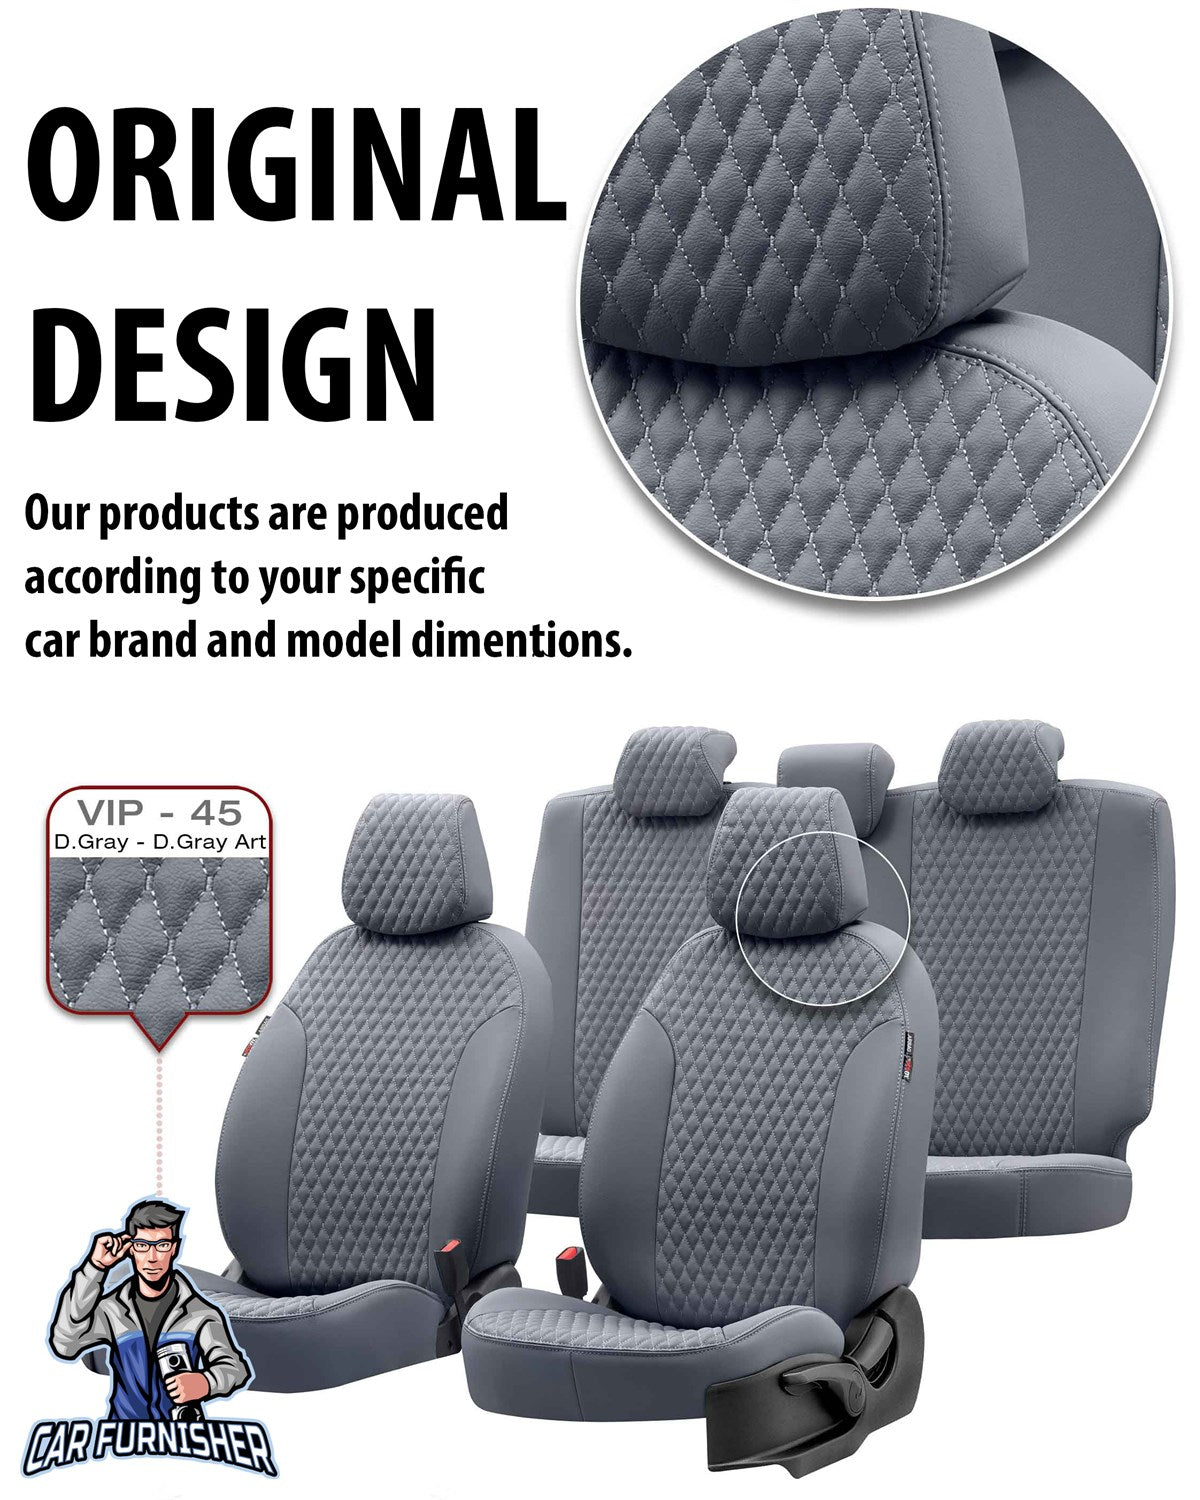 Citroen C1 Seat Covers Amsterdam Leather Design Black Leather